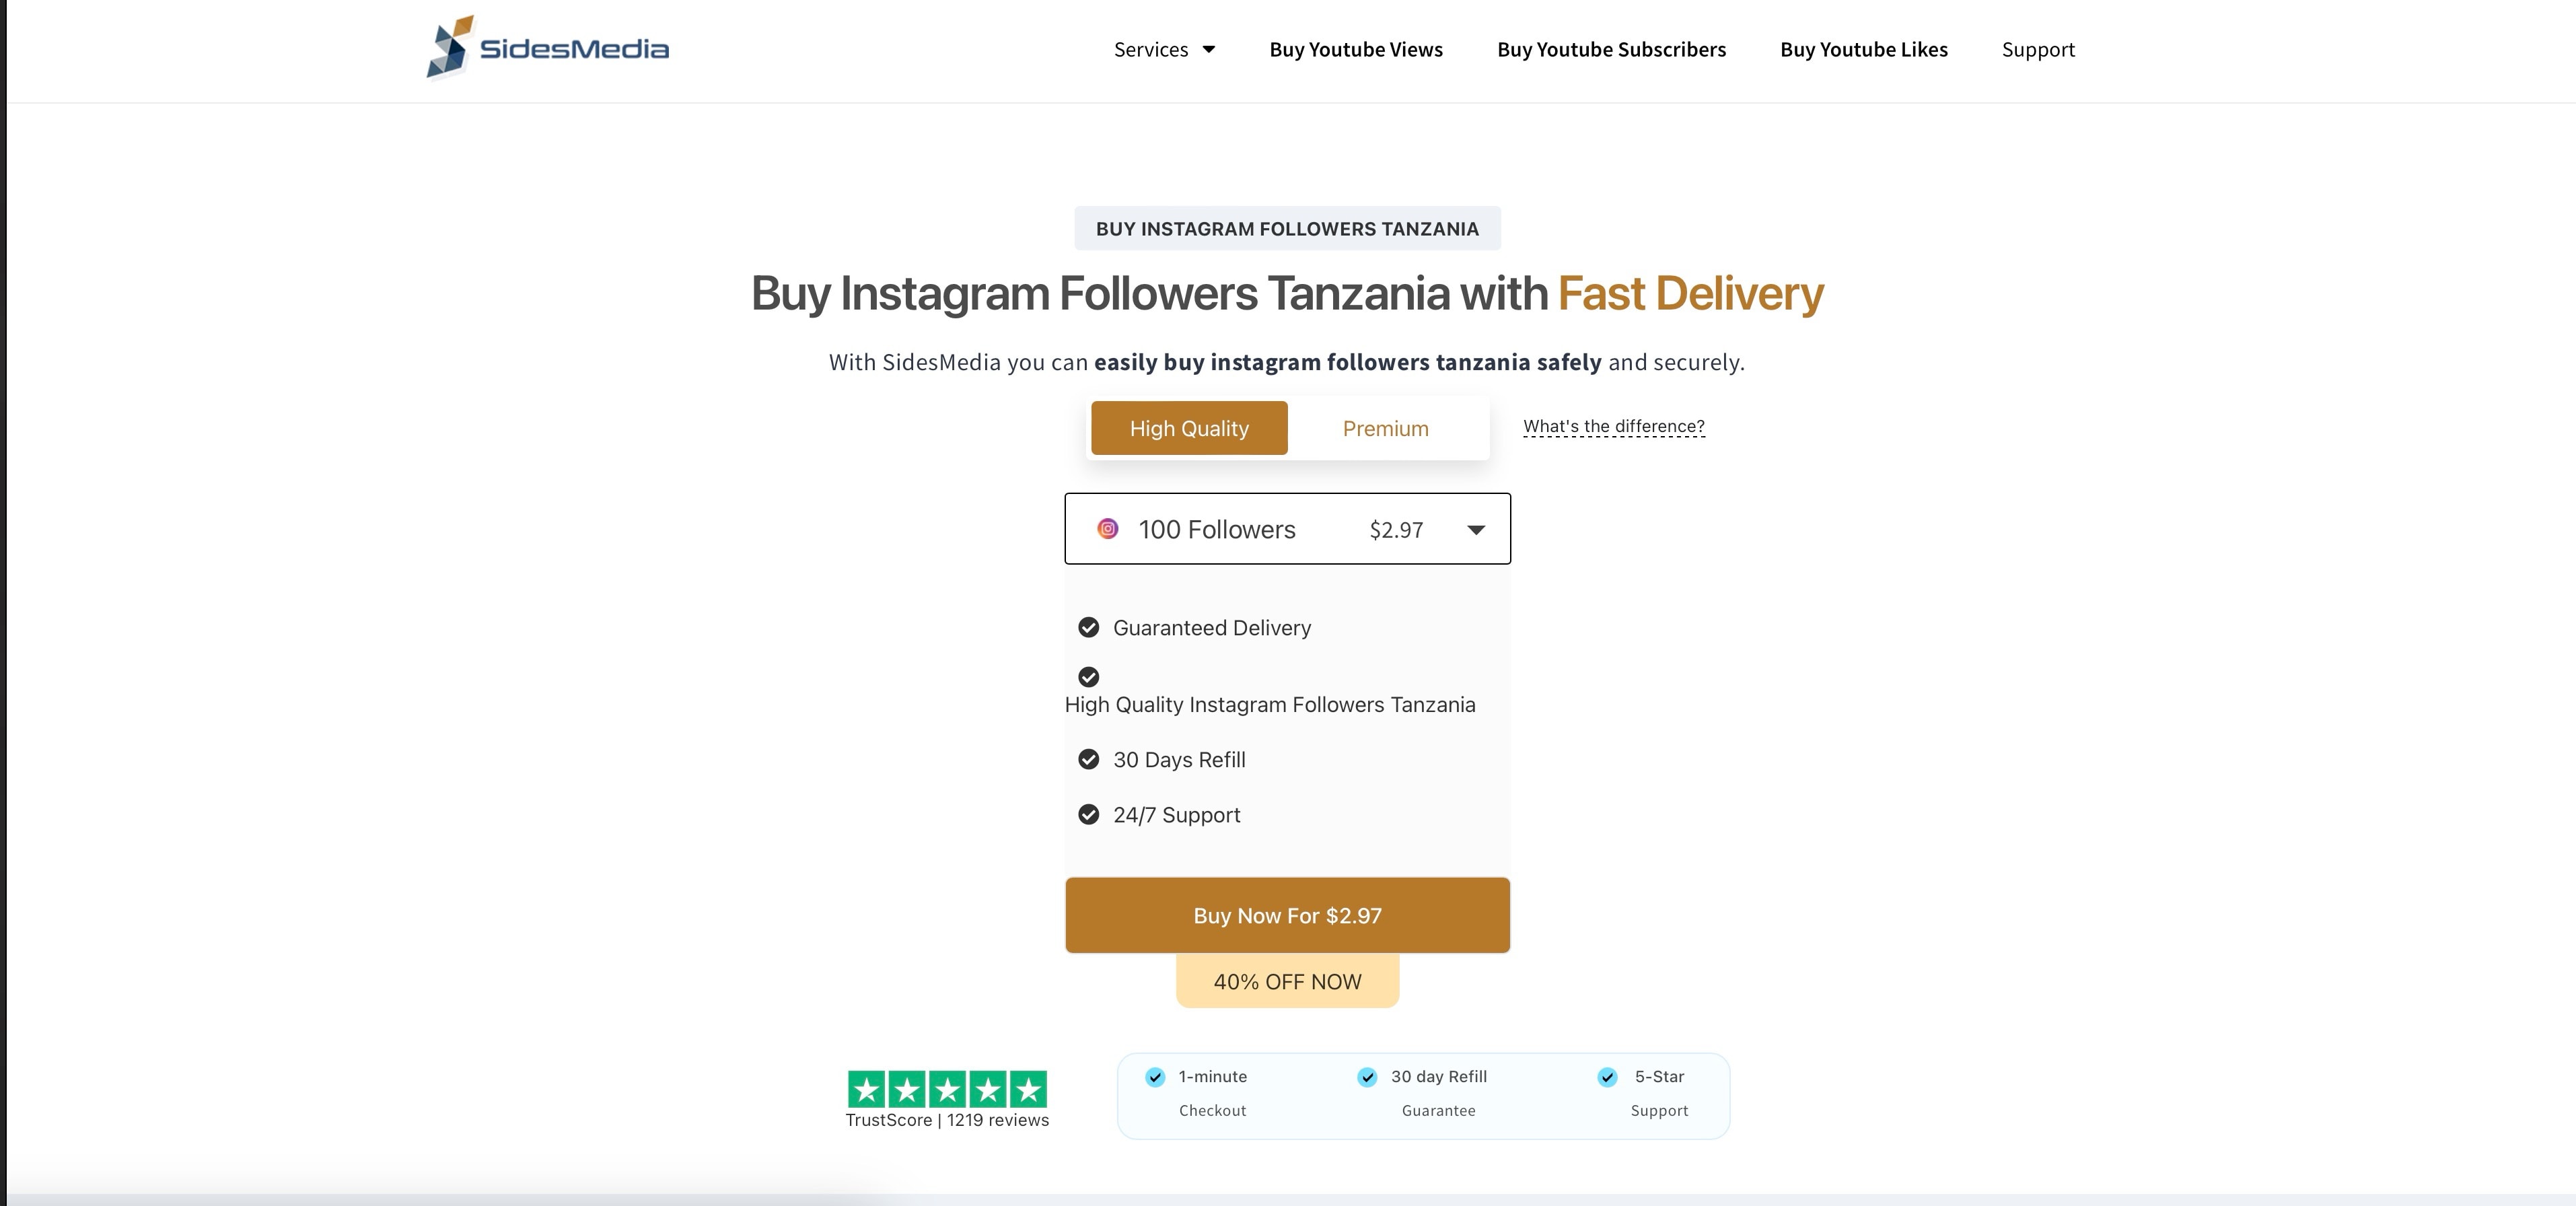 sidesmedia buy instagram followers tanzania page